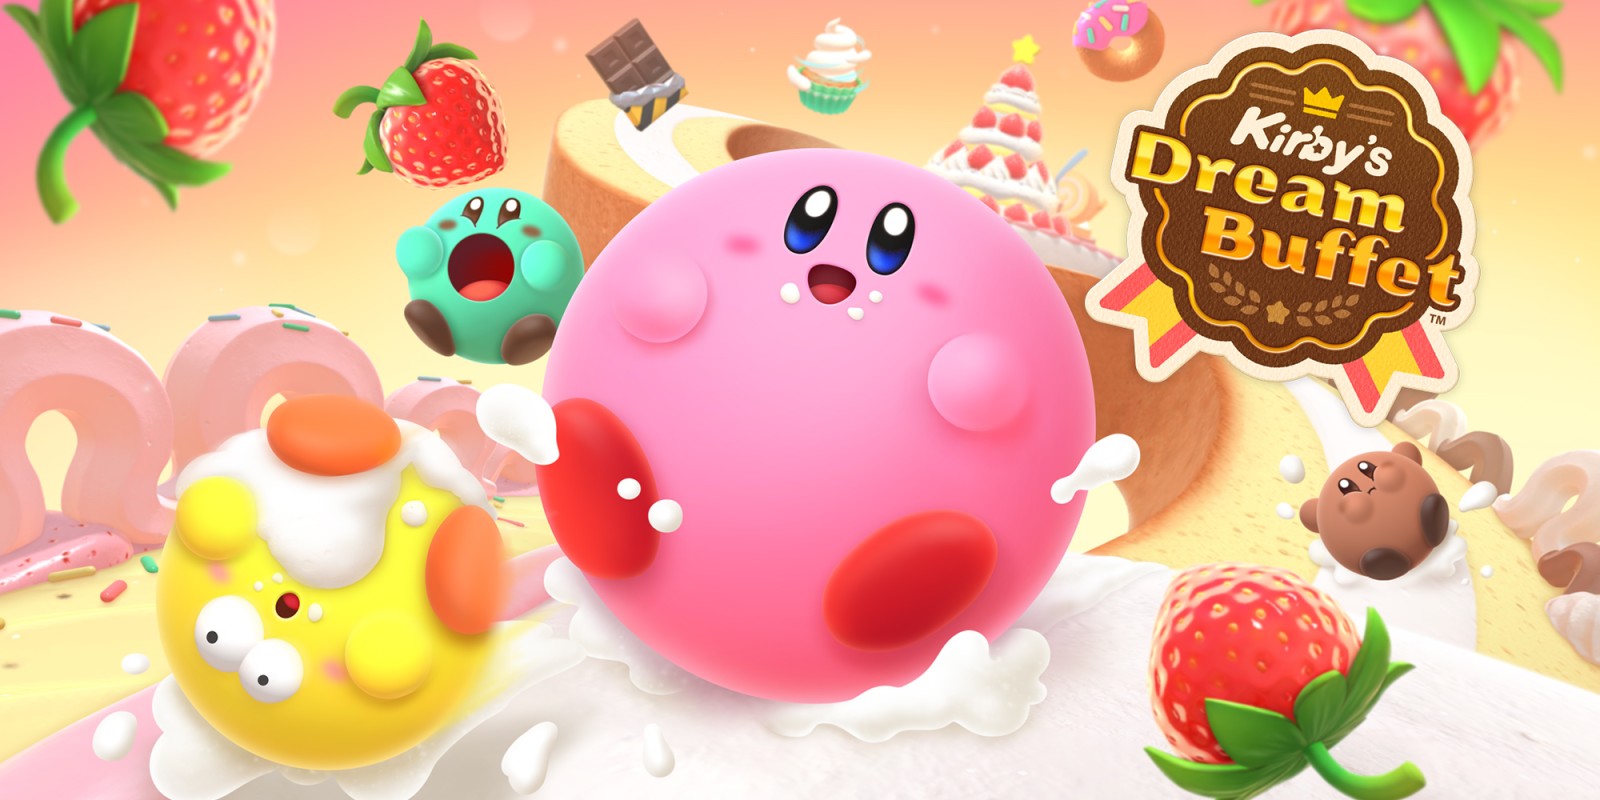 Kirby's Dream Buffet kommt nächsten Mittwoch heraus Titel